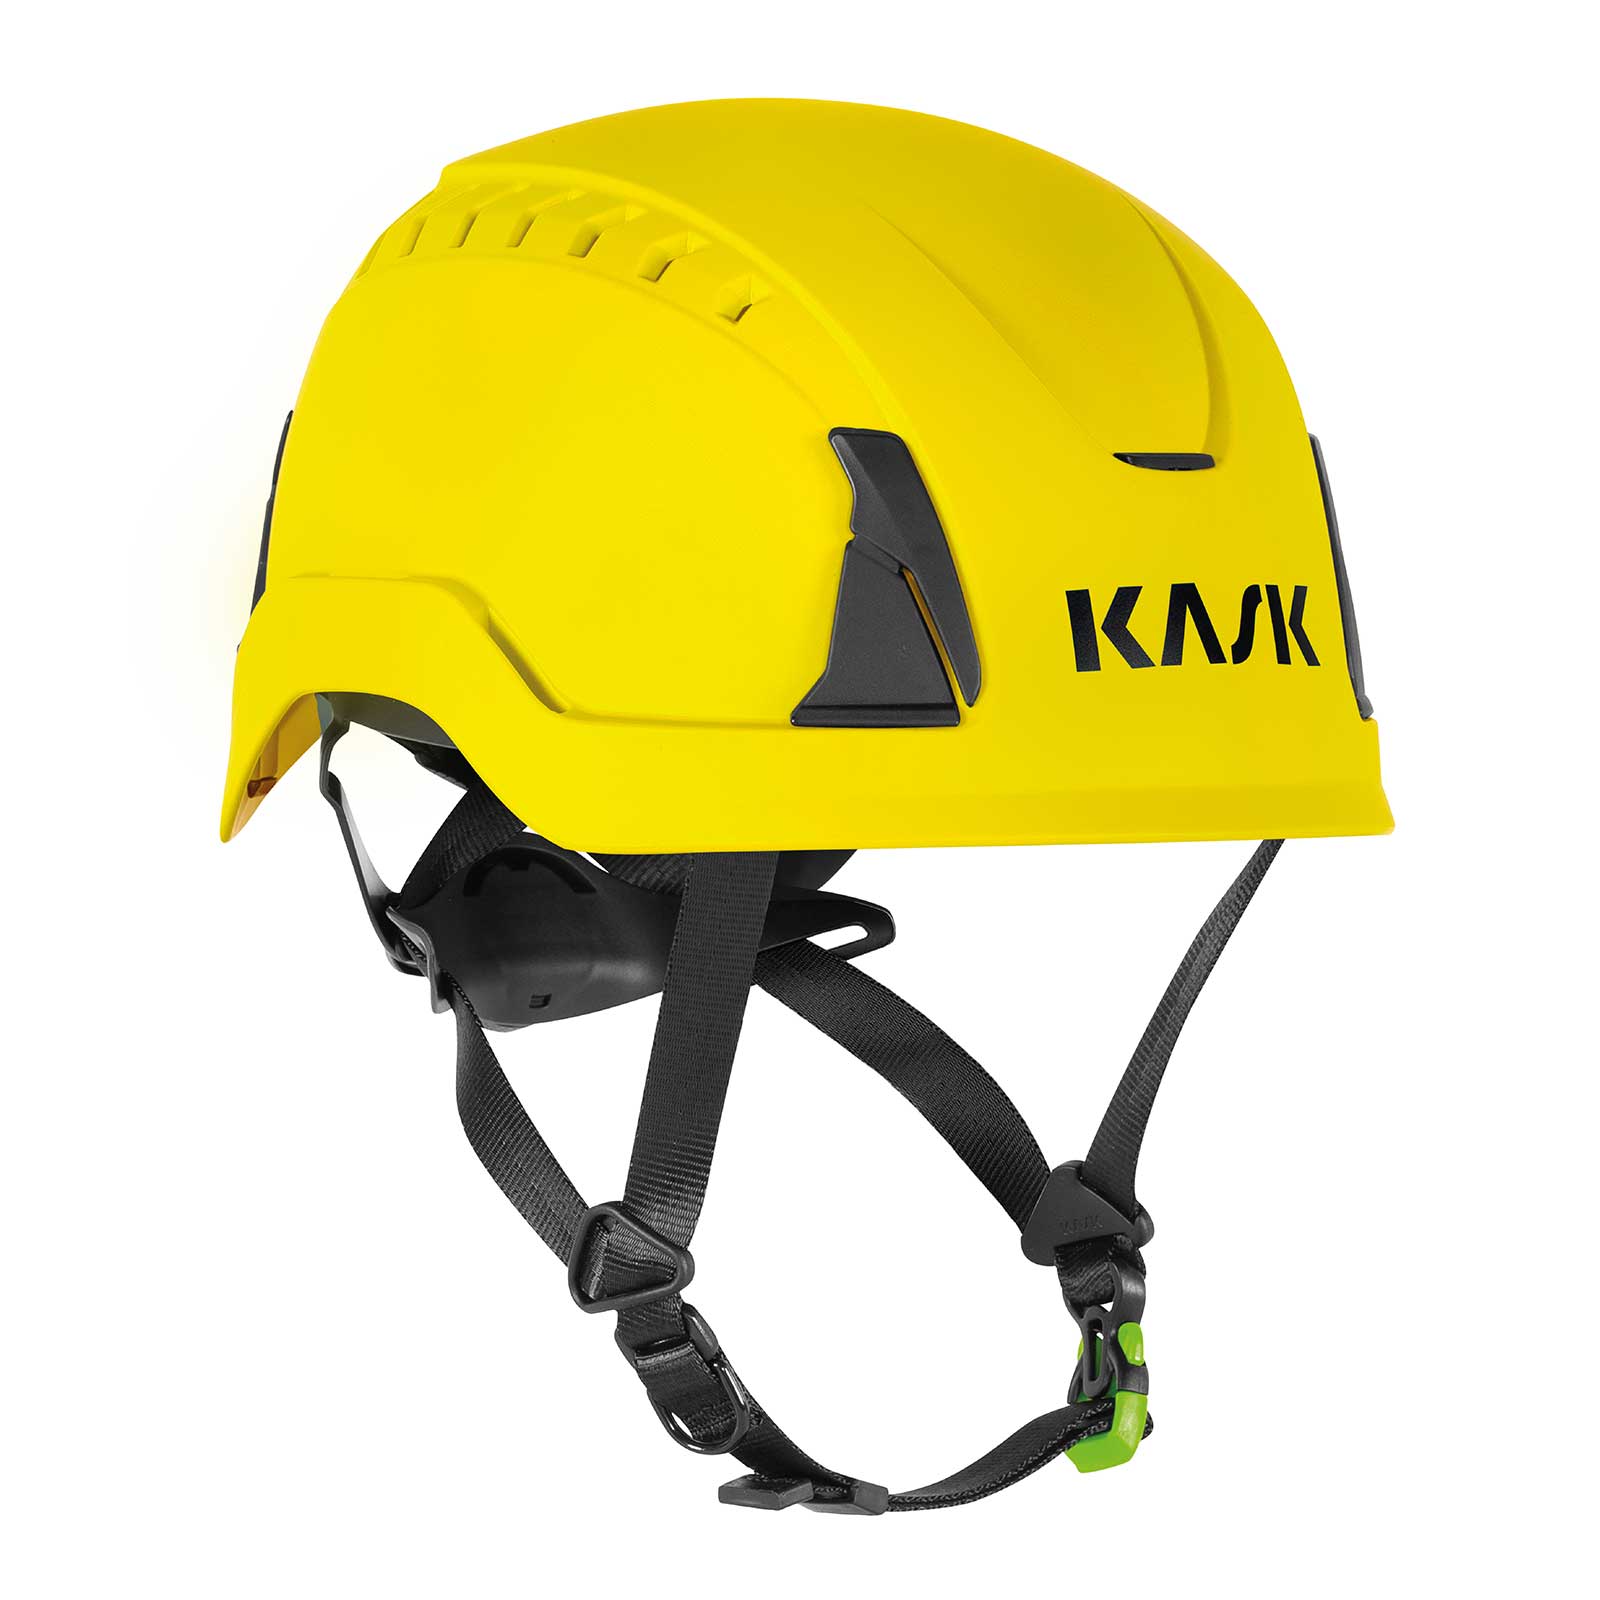 KASK Schutzhelm Primero PL, Kletterhelm, Bergsteigerhelm, 14 Belüftungskanäle Farbe:gelb von KASK